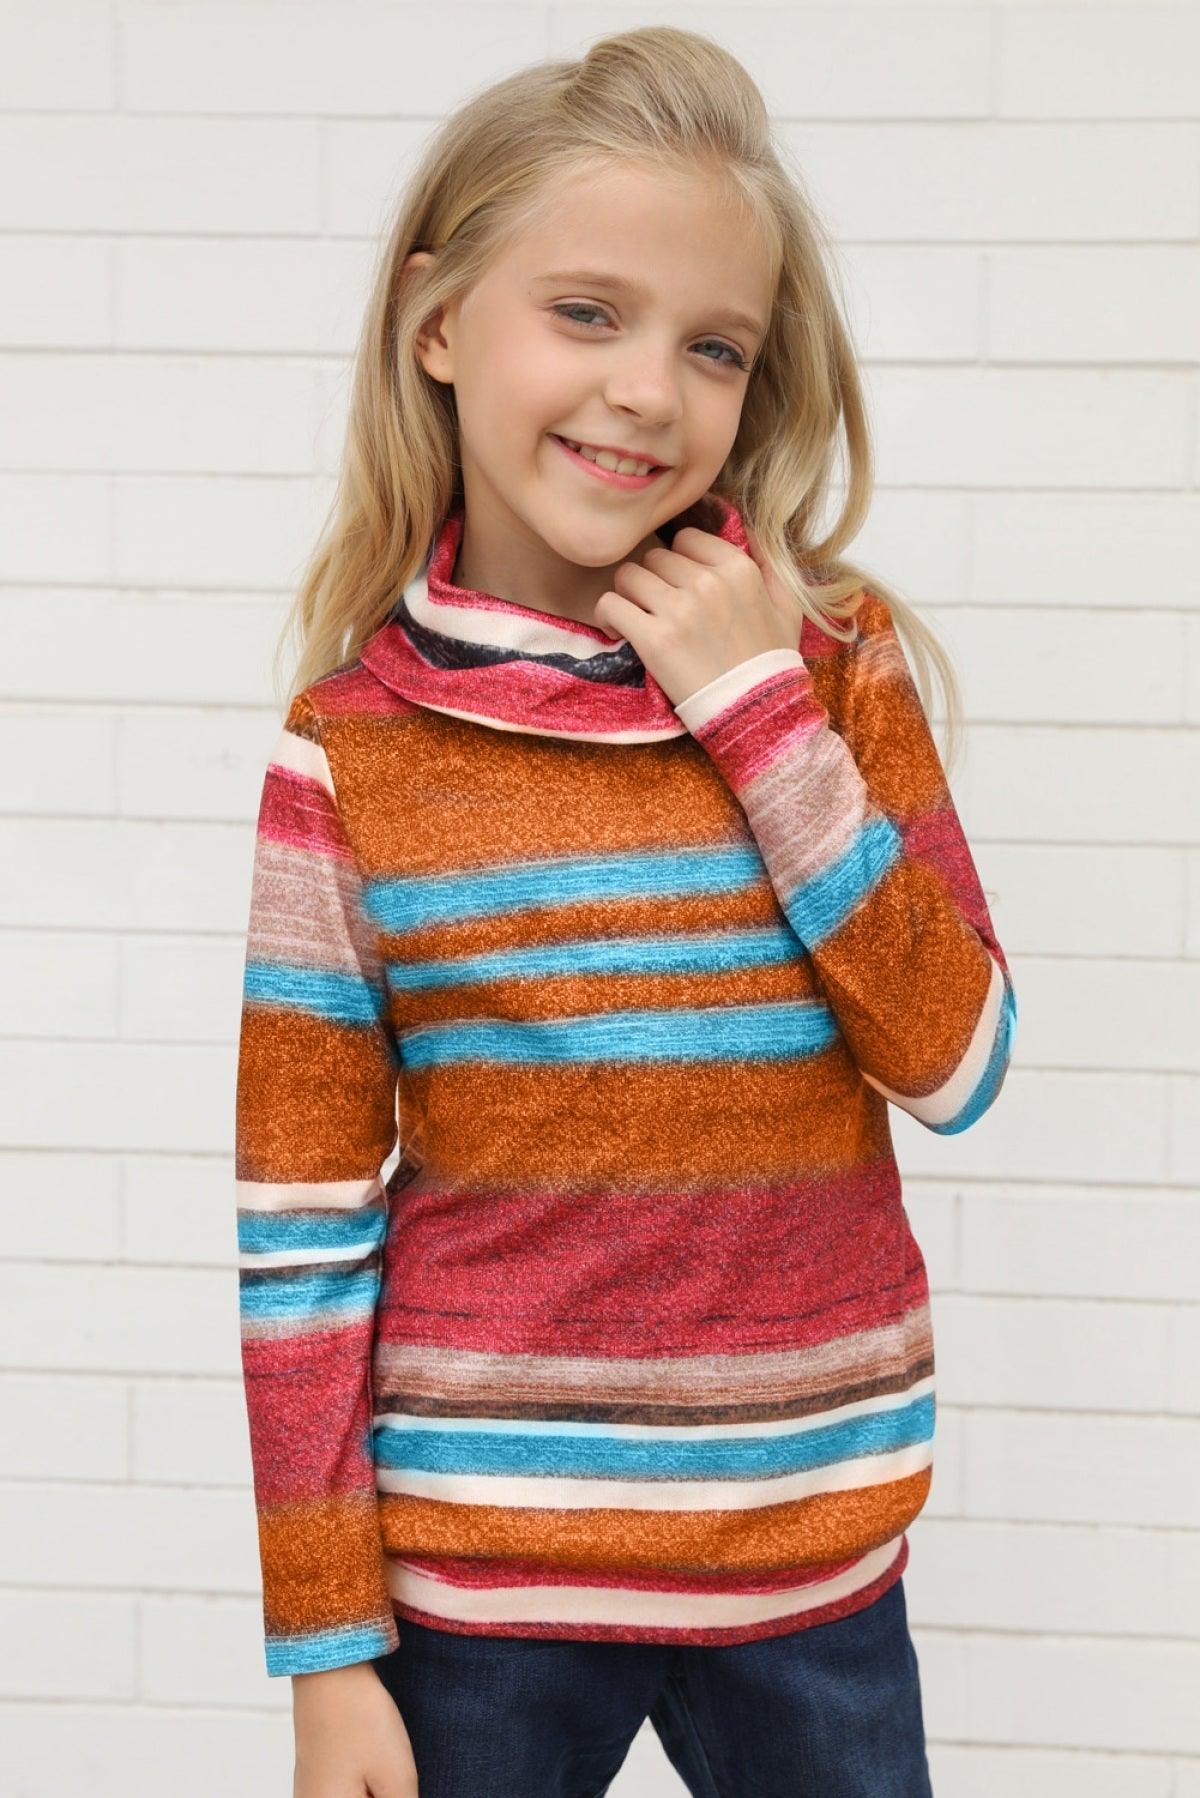 Cowl Neck Girl's Striped Sweatshirt - That’s So Fletch Boutique 